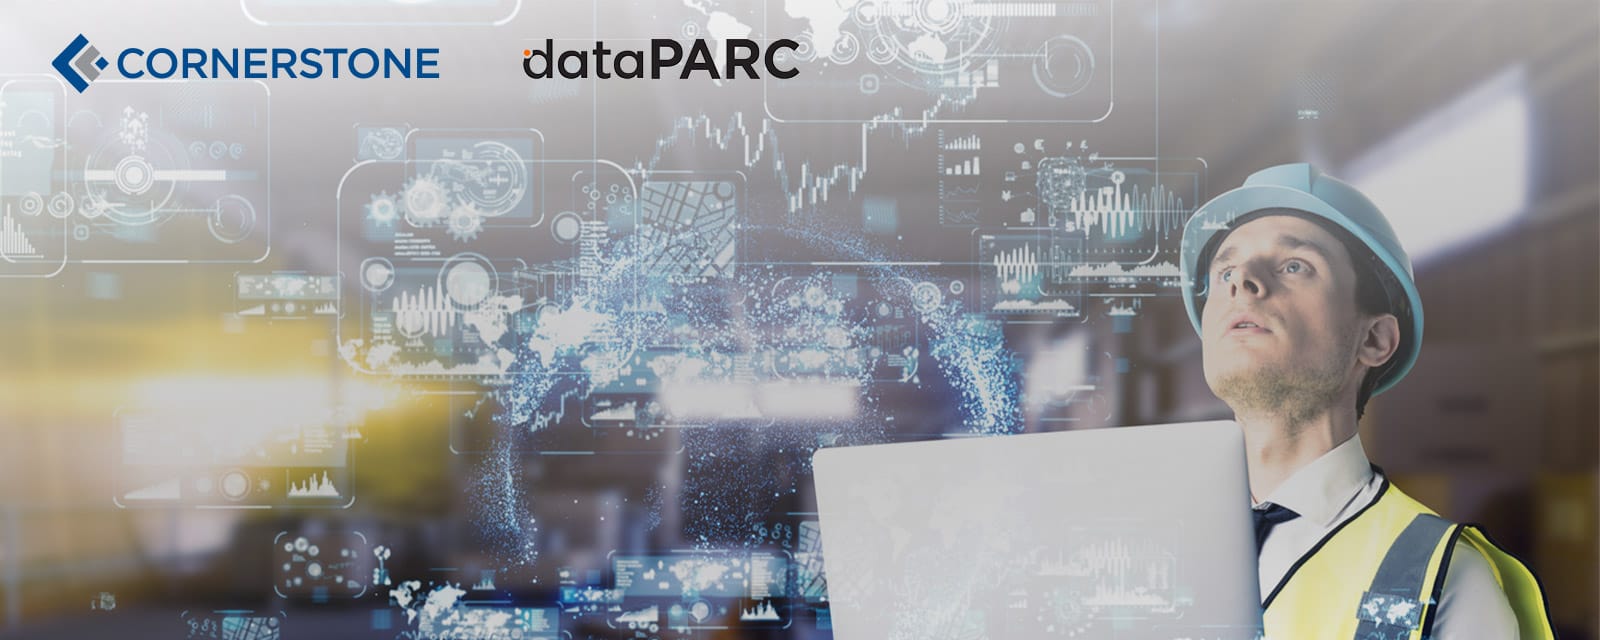 Cornerstone Controls Announces Partnership with dataPARC